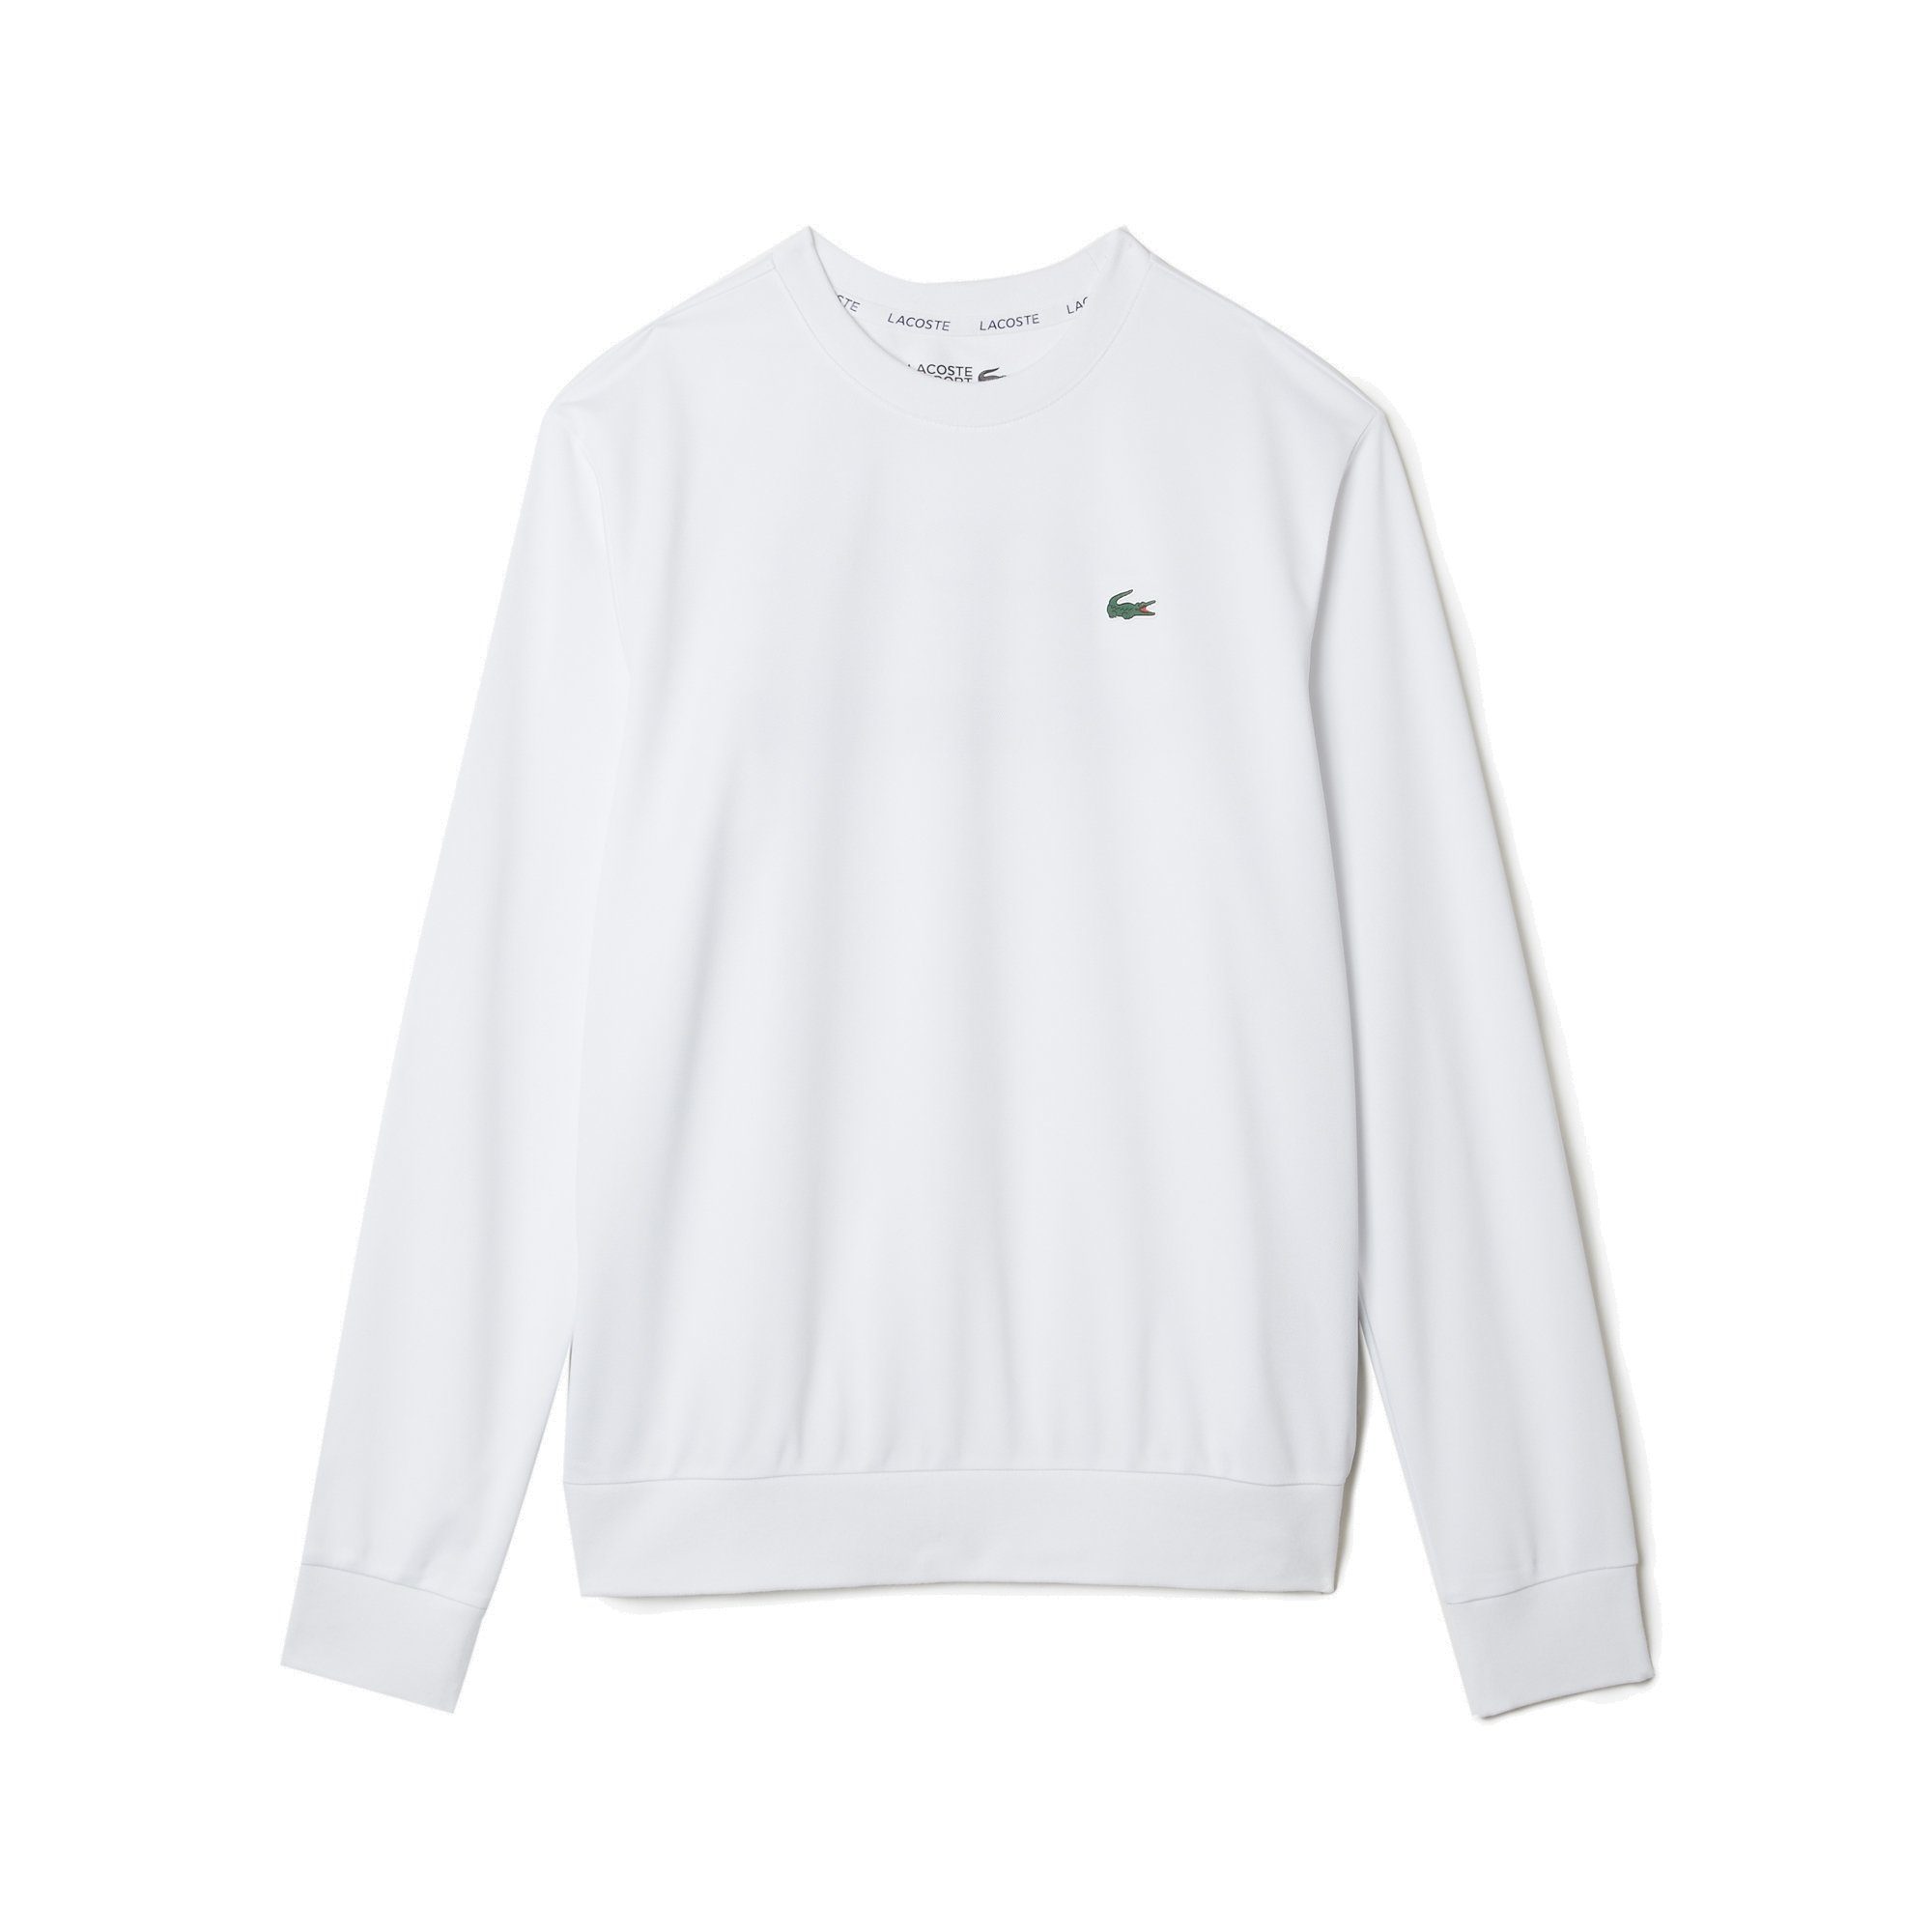 (001) Lacoste Sweatshirt WHITE